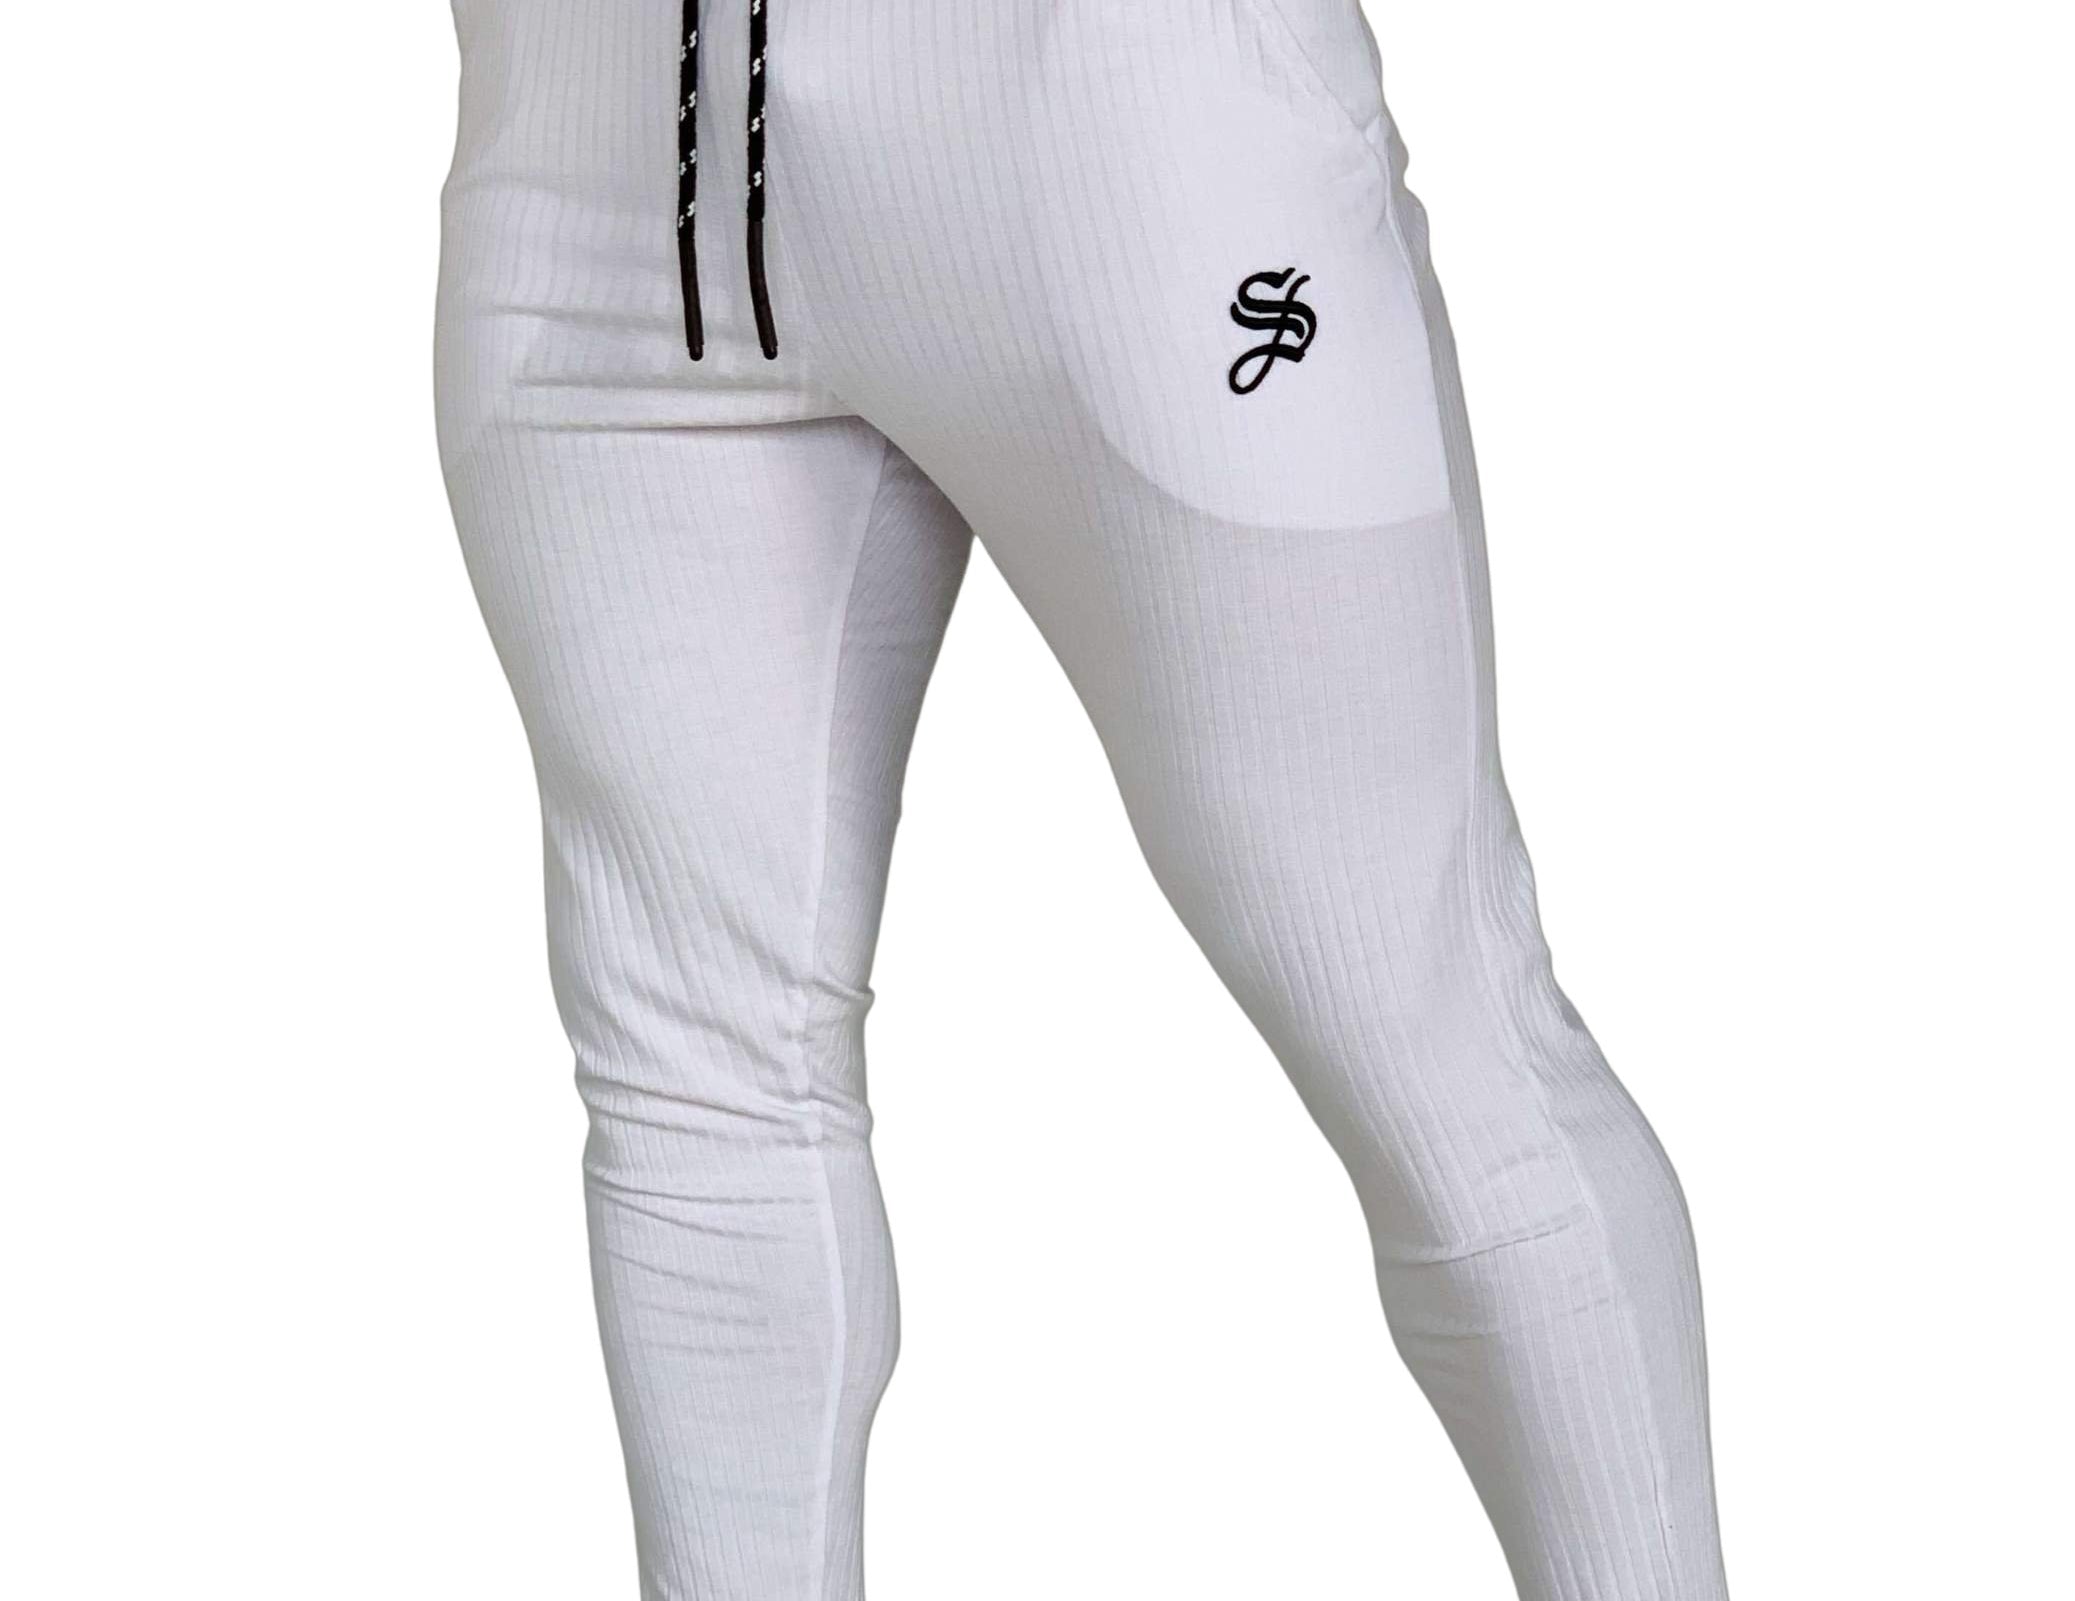 Mendoza - White Joggers for Men - Sarman Fashion - Wholesale Clothing Fashion Brand for Men from Canada